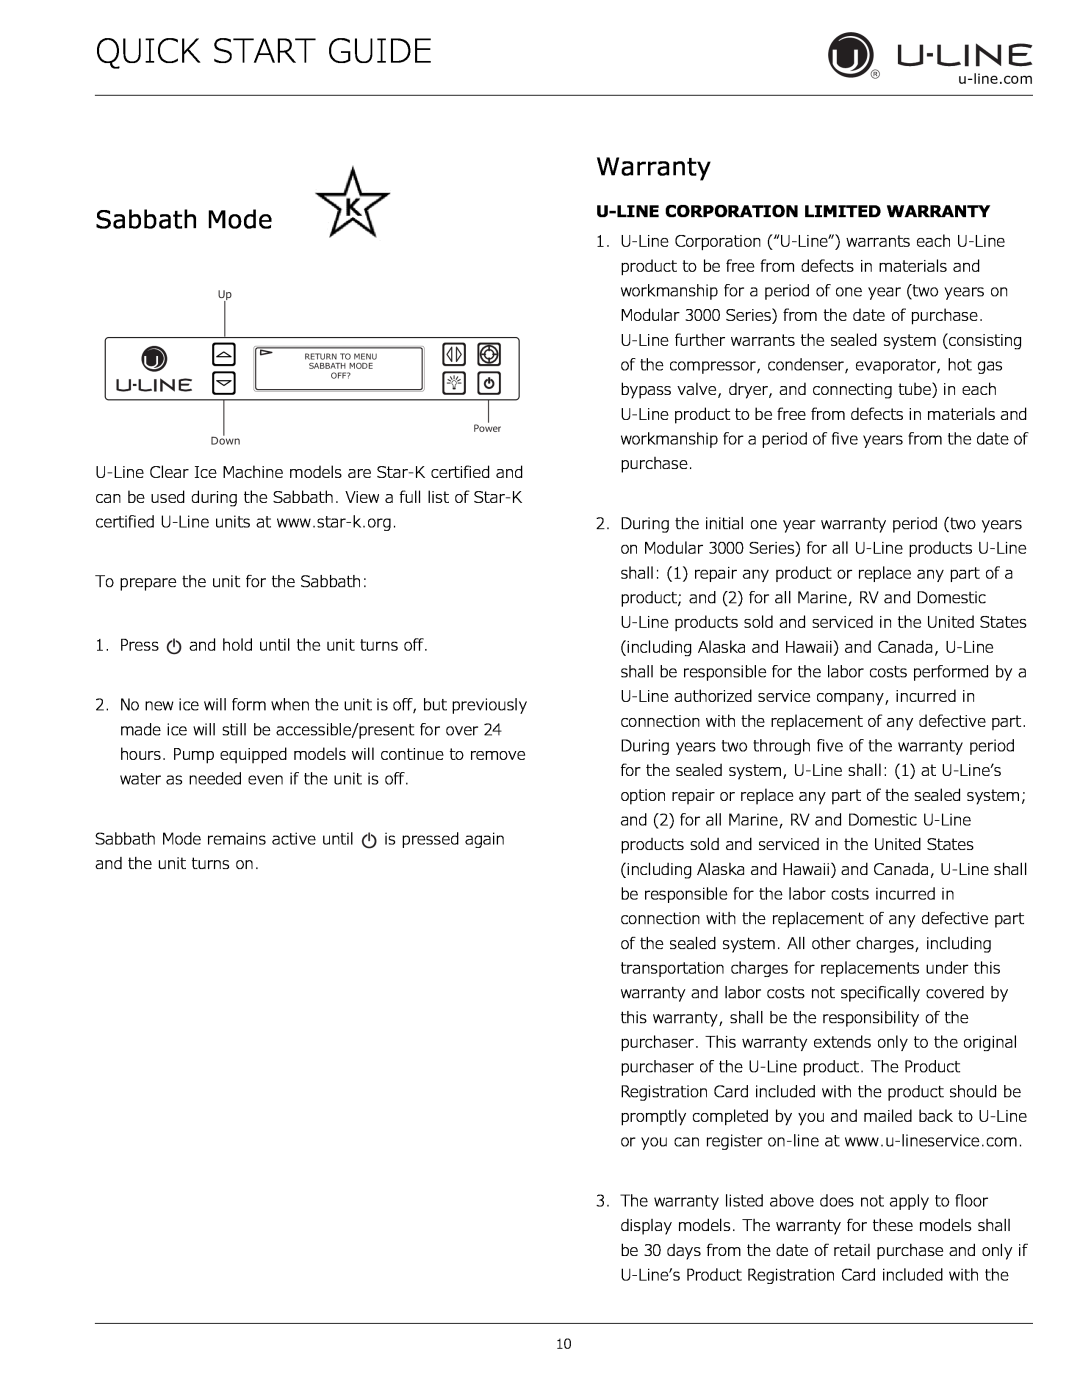 U-Line 3018 CLR  115 V / 60 Hz quick start Sabbath Mode, Quick Start Guide, U-Linecorporation Limited Warranty 